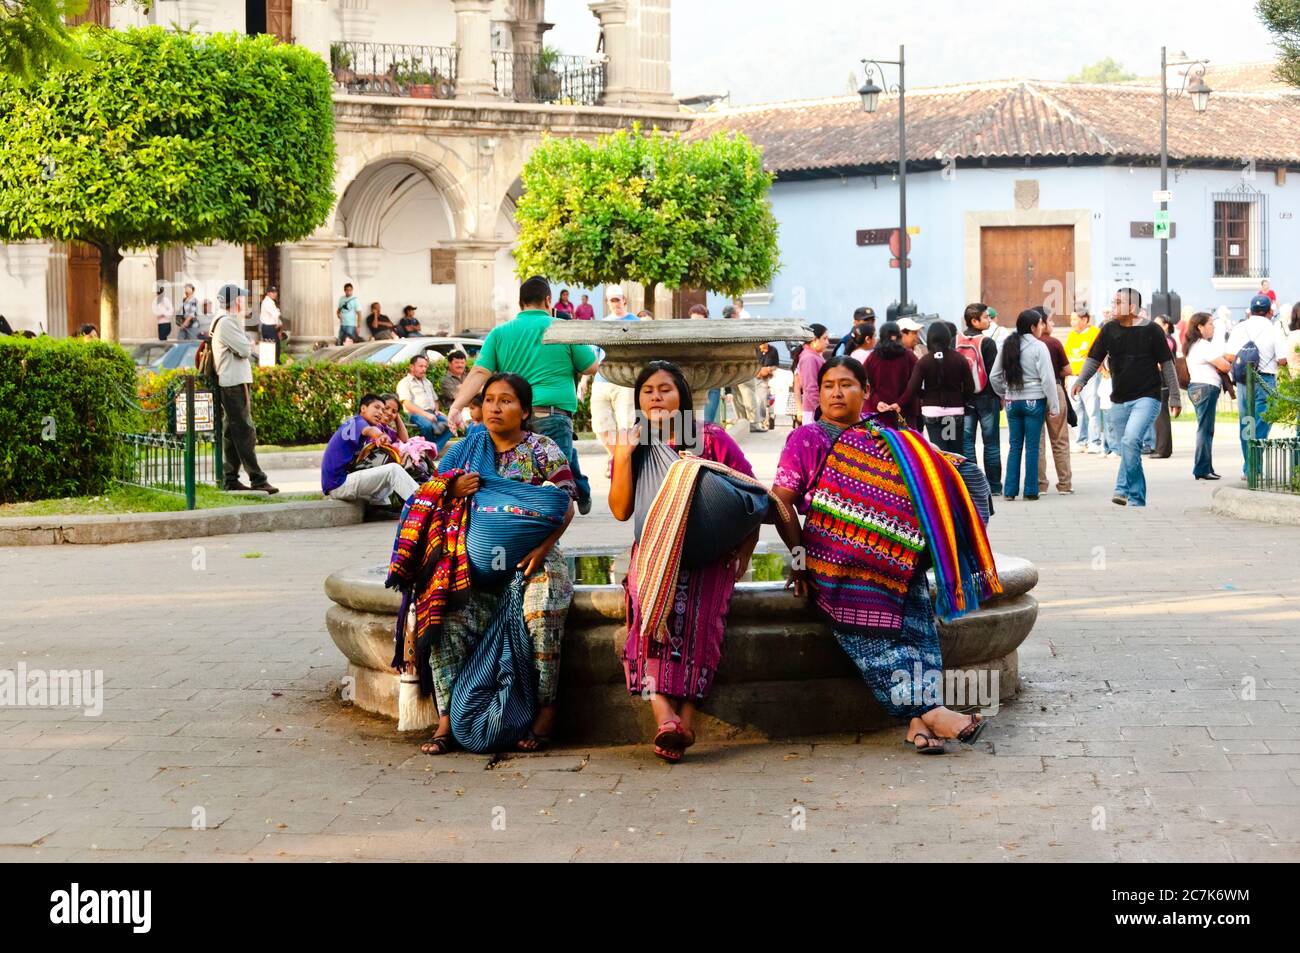 Antigua, Guatemala - May 02, 2011: Three traditionally dressed women in the main town plaza. Stock Photo